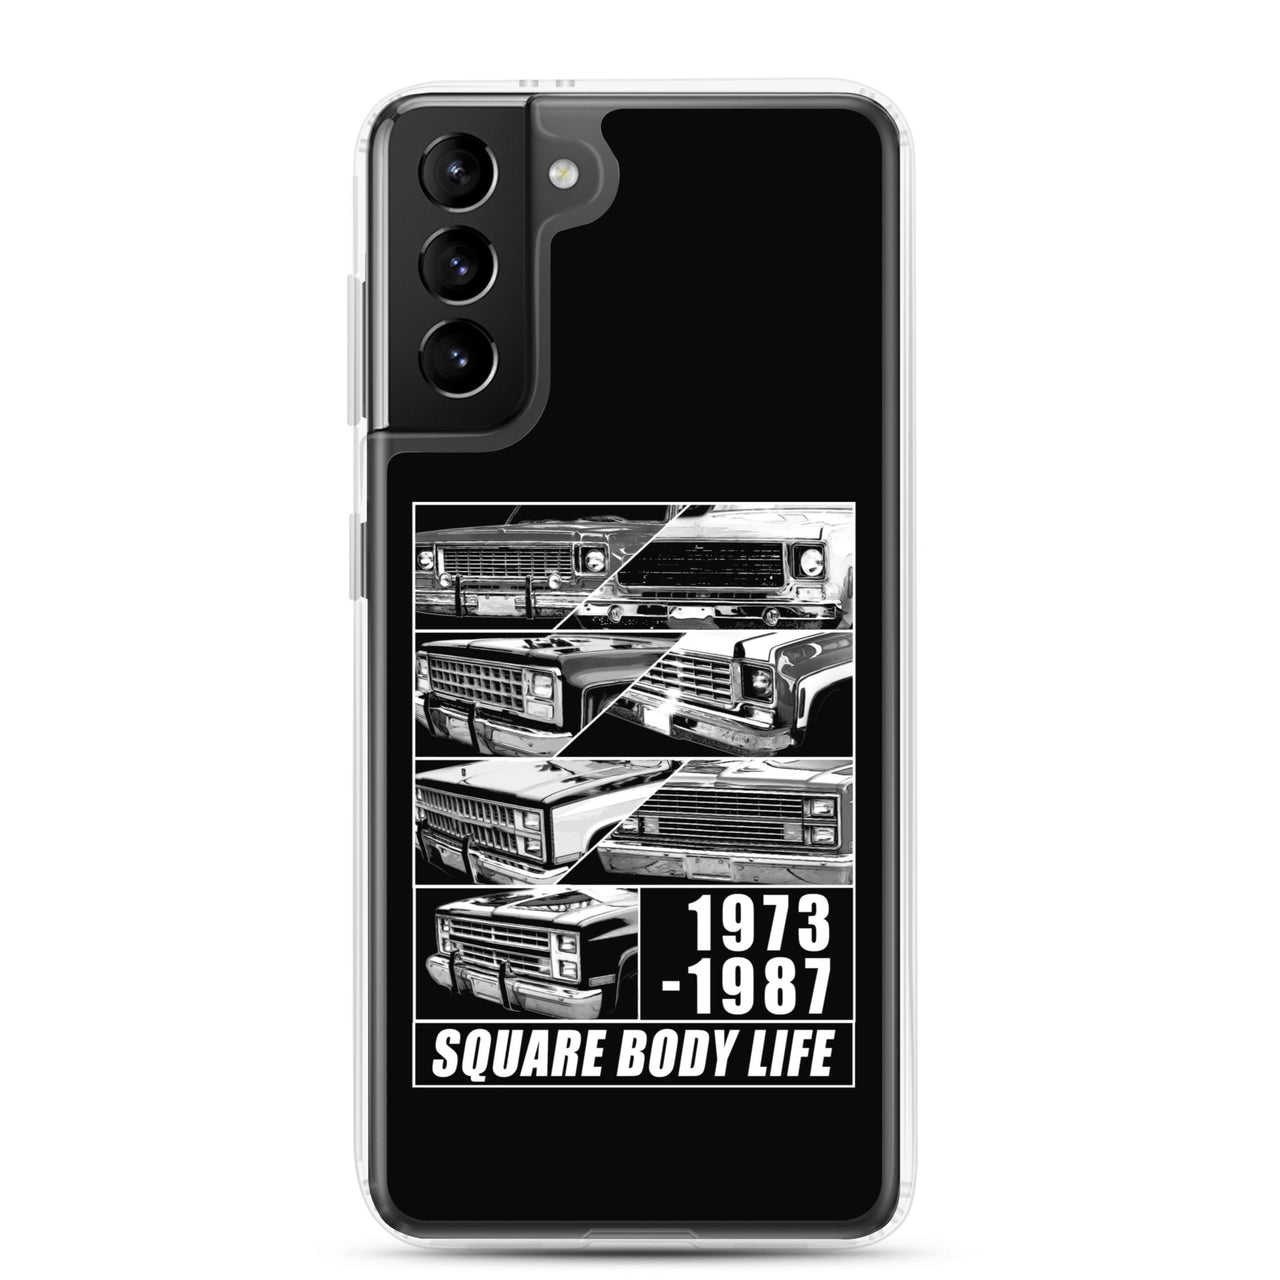 Squarebody Truck Samsung Phone Case For S21 Plus